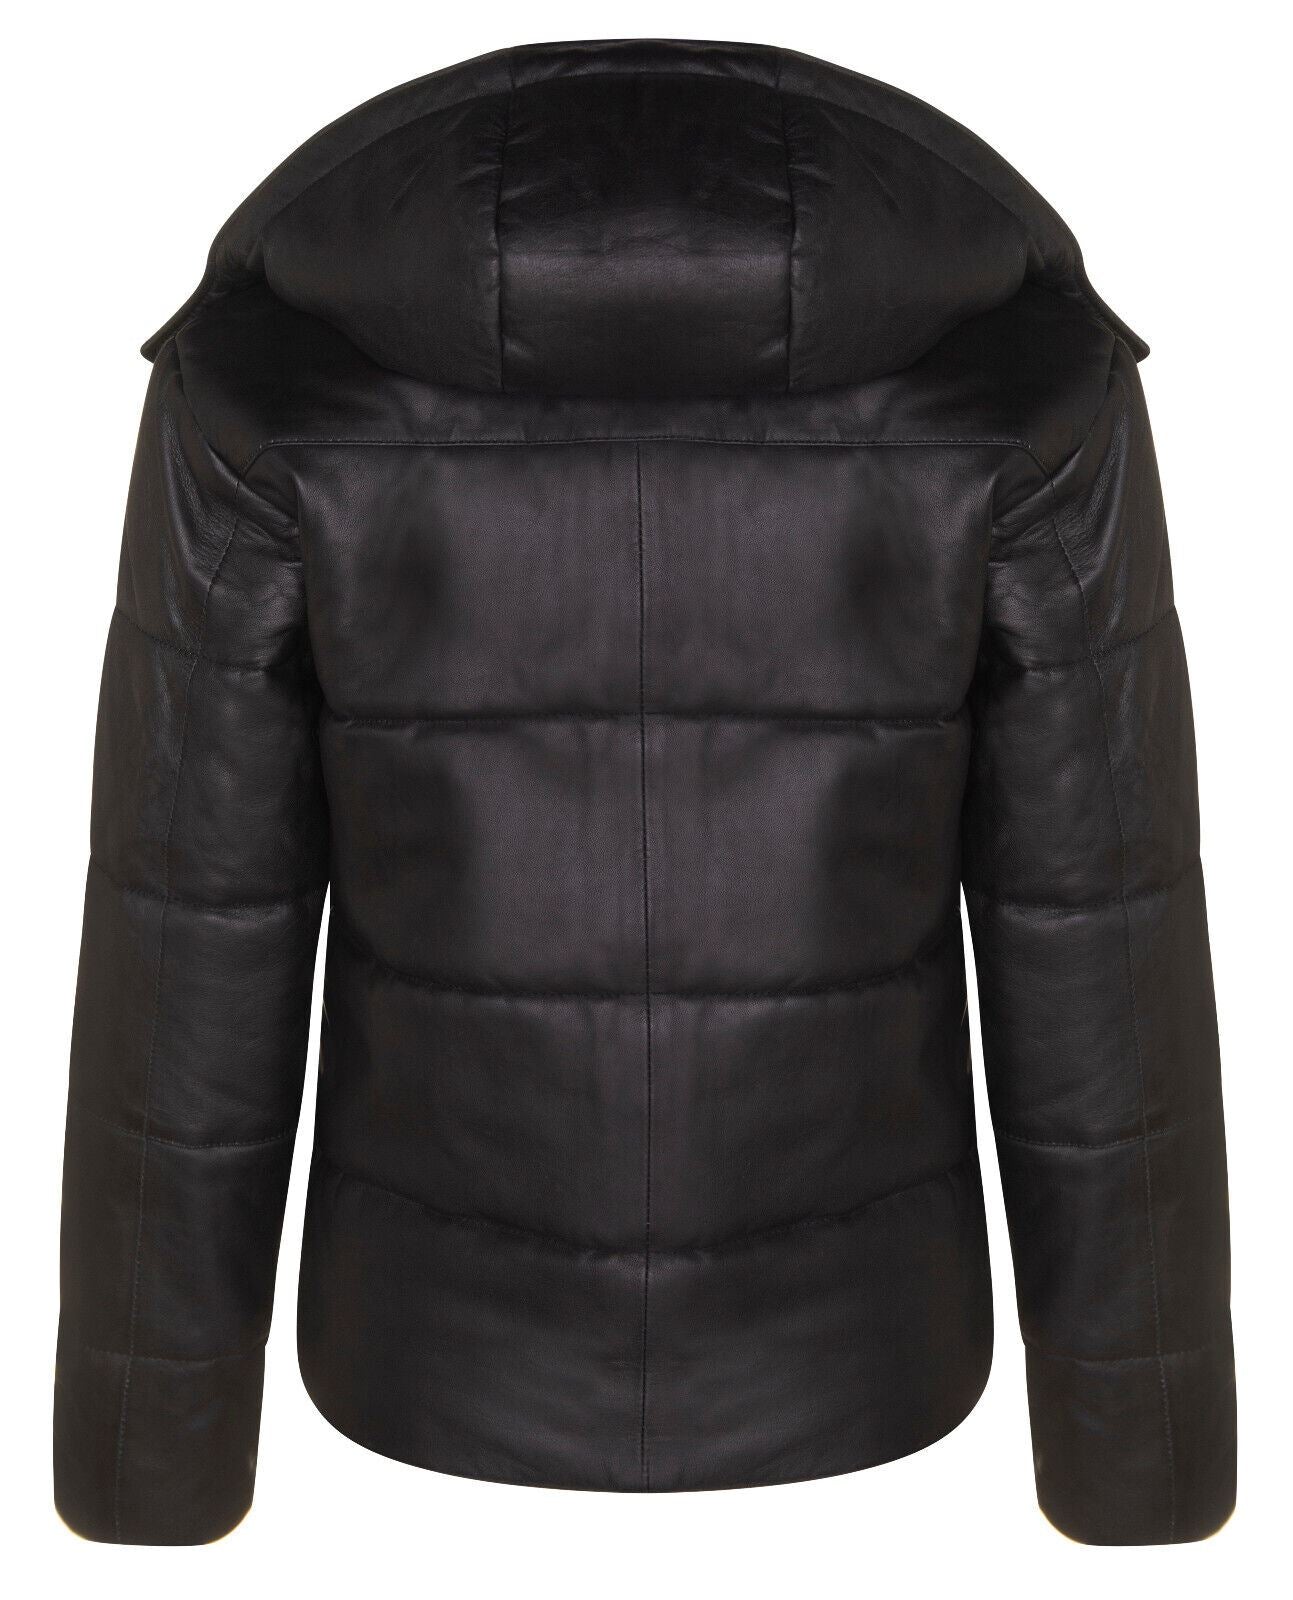 Womens Black Puffer Leather Bomber Jacket-Minehead - Upperclass Fashions 